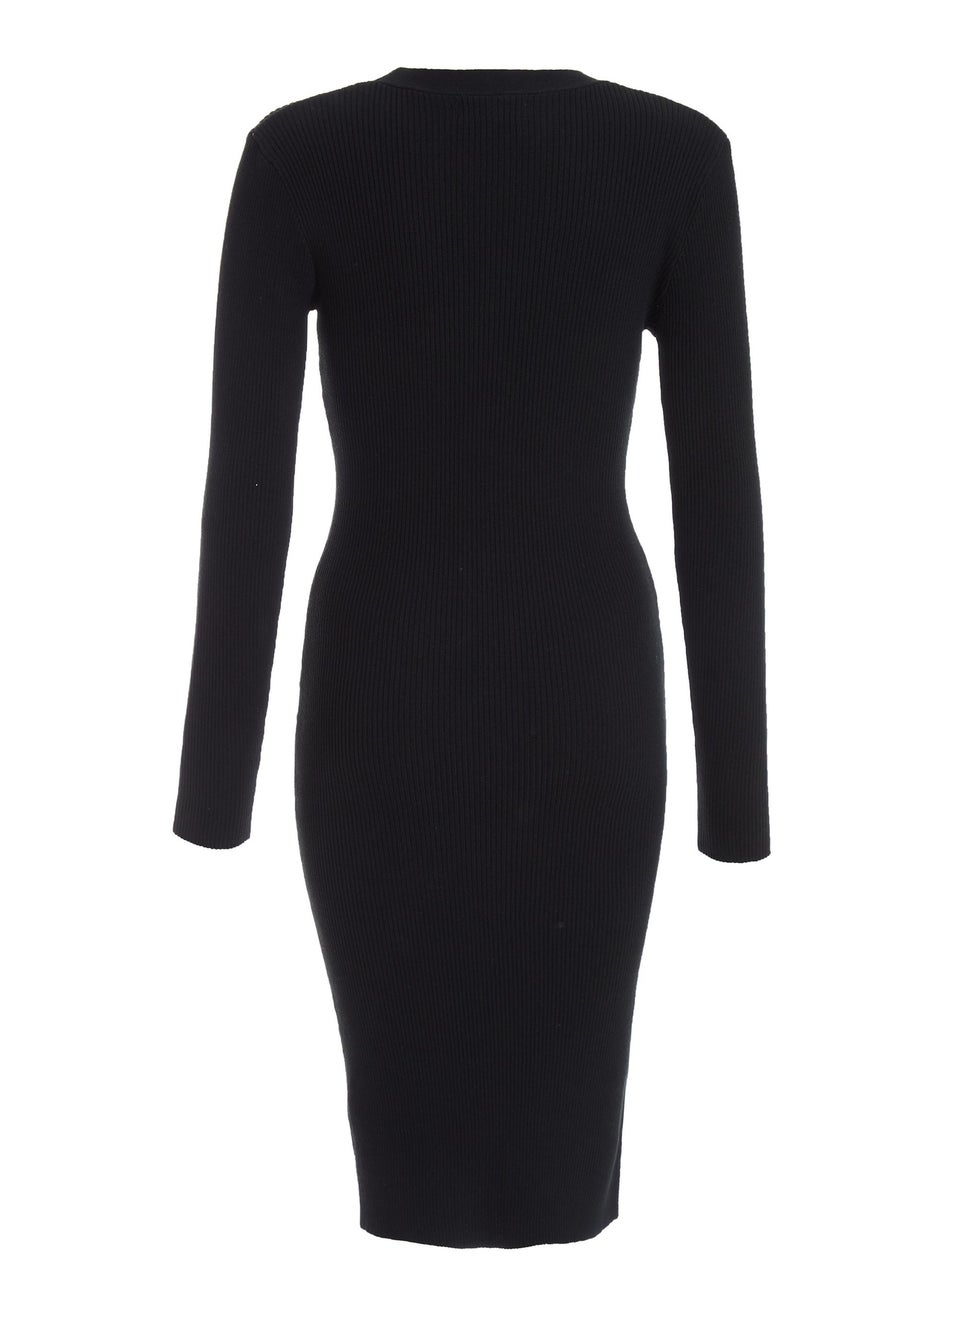 Quiz Black Knitted Button Midi Dress